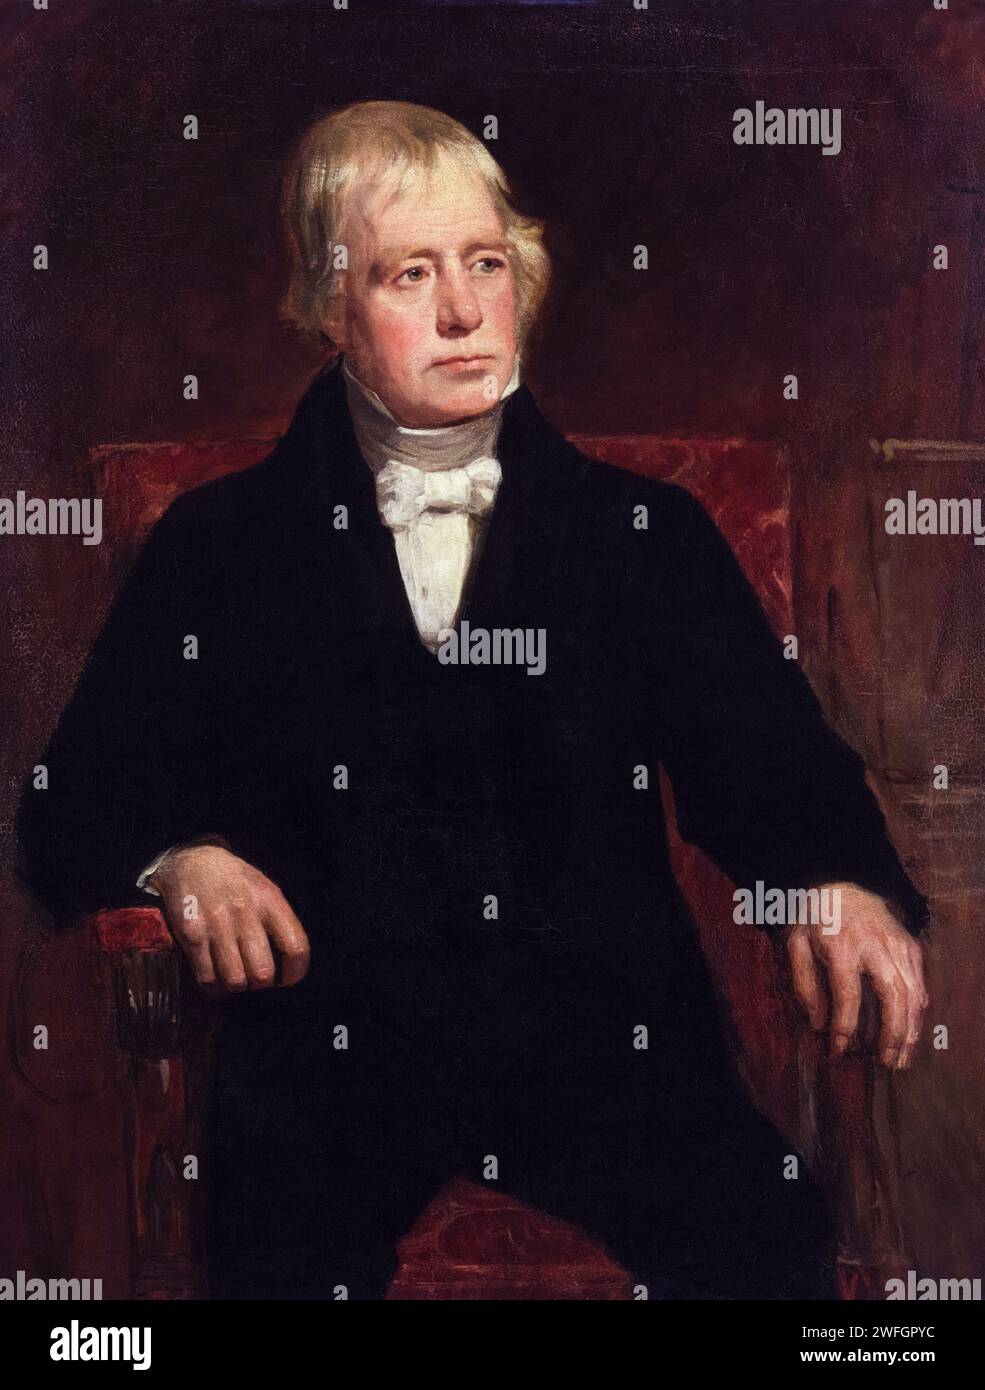 Sir Walter Scott, 1st Baronet (1771-1832), Scottish historian, novelist, poet, and playwright, portrait painting in oil on canvas by John Graham Gilbert, 1829 Stock Photo